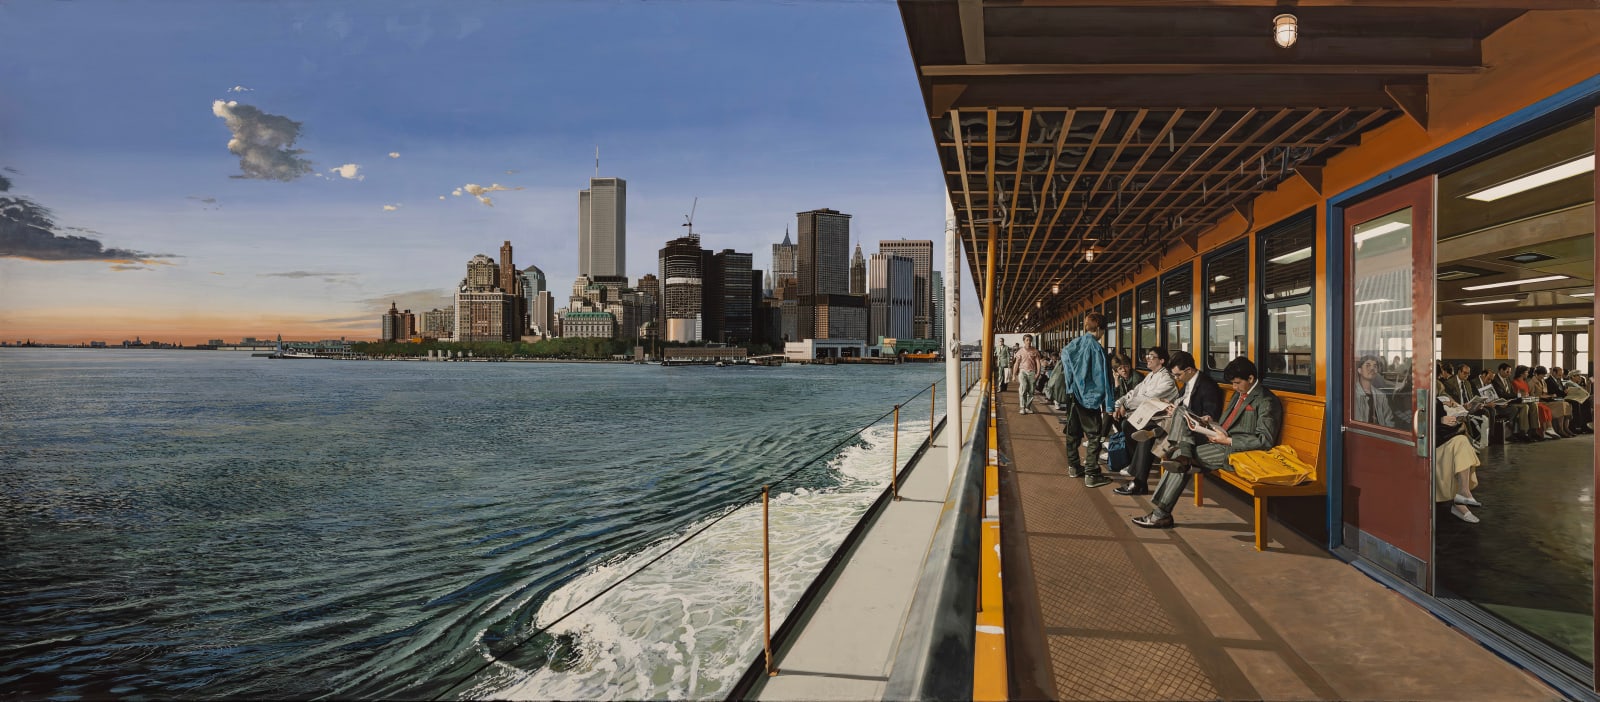 Richard Estes, Lower Manhattan from the Staten Island Ferry (World Trade Center), 1987